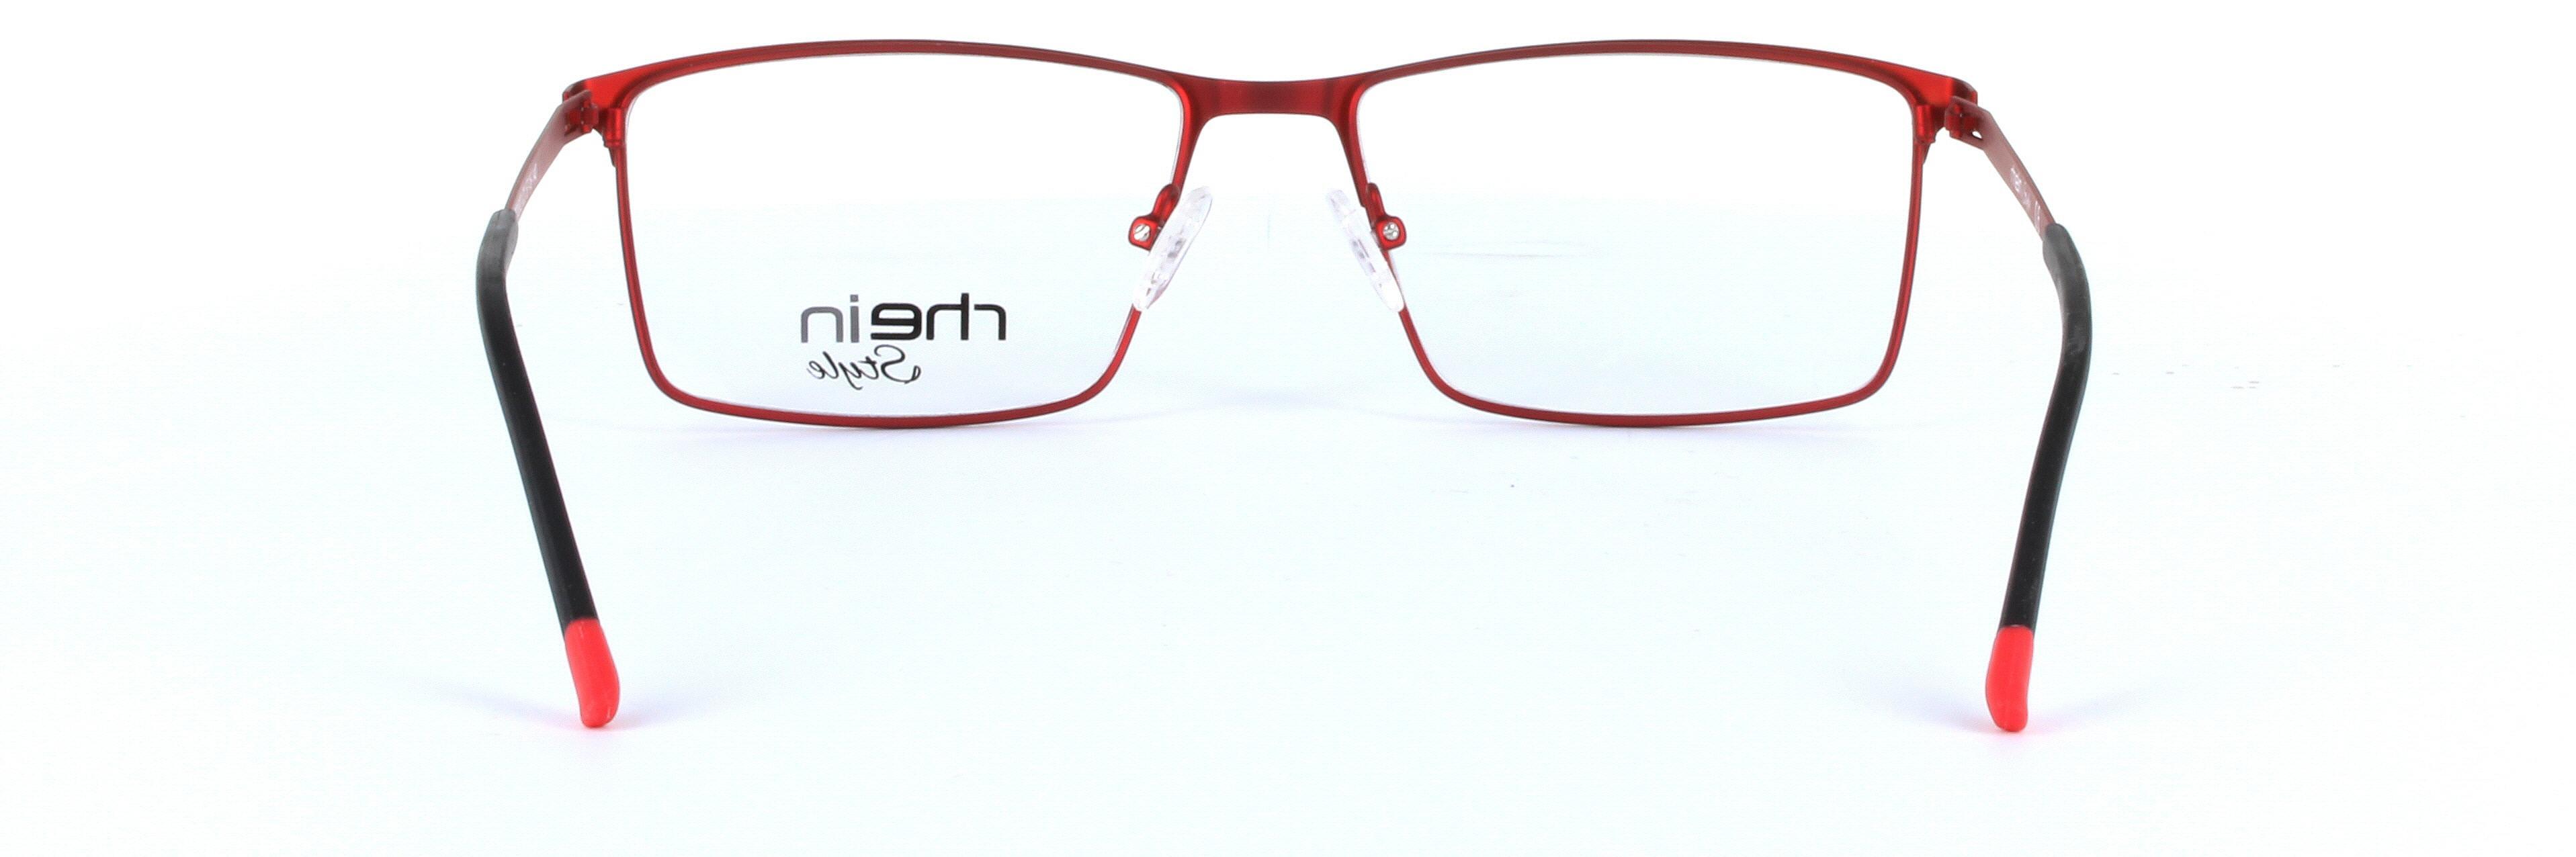 Mitchell Black Full Rim Rectangular Metal Glasses - Image View 3